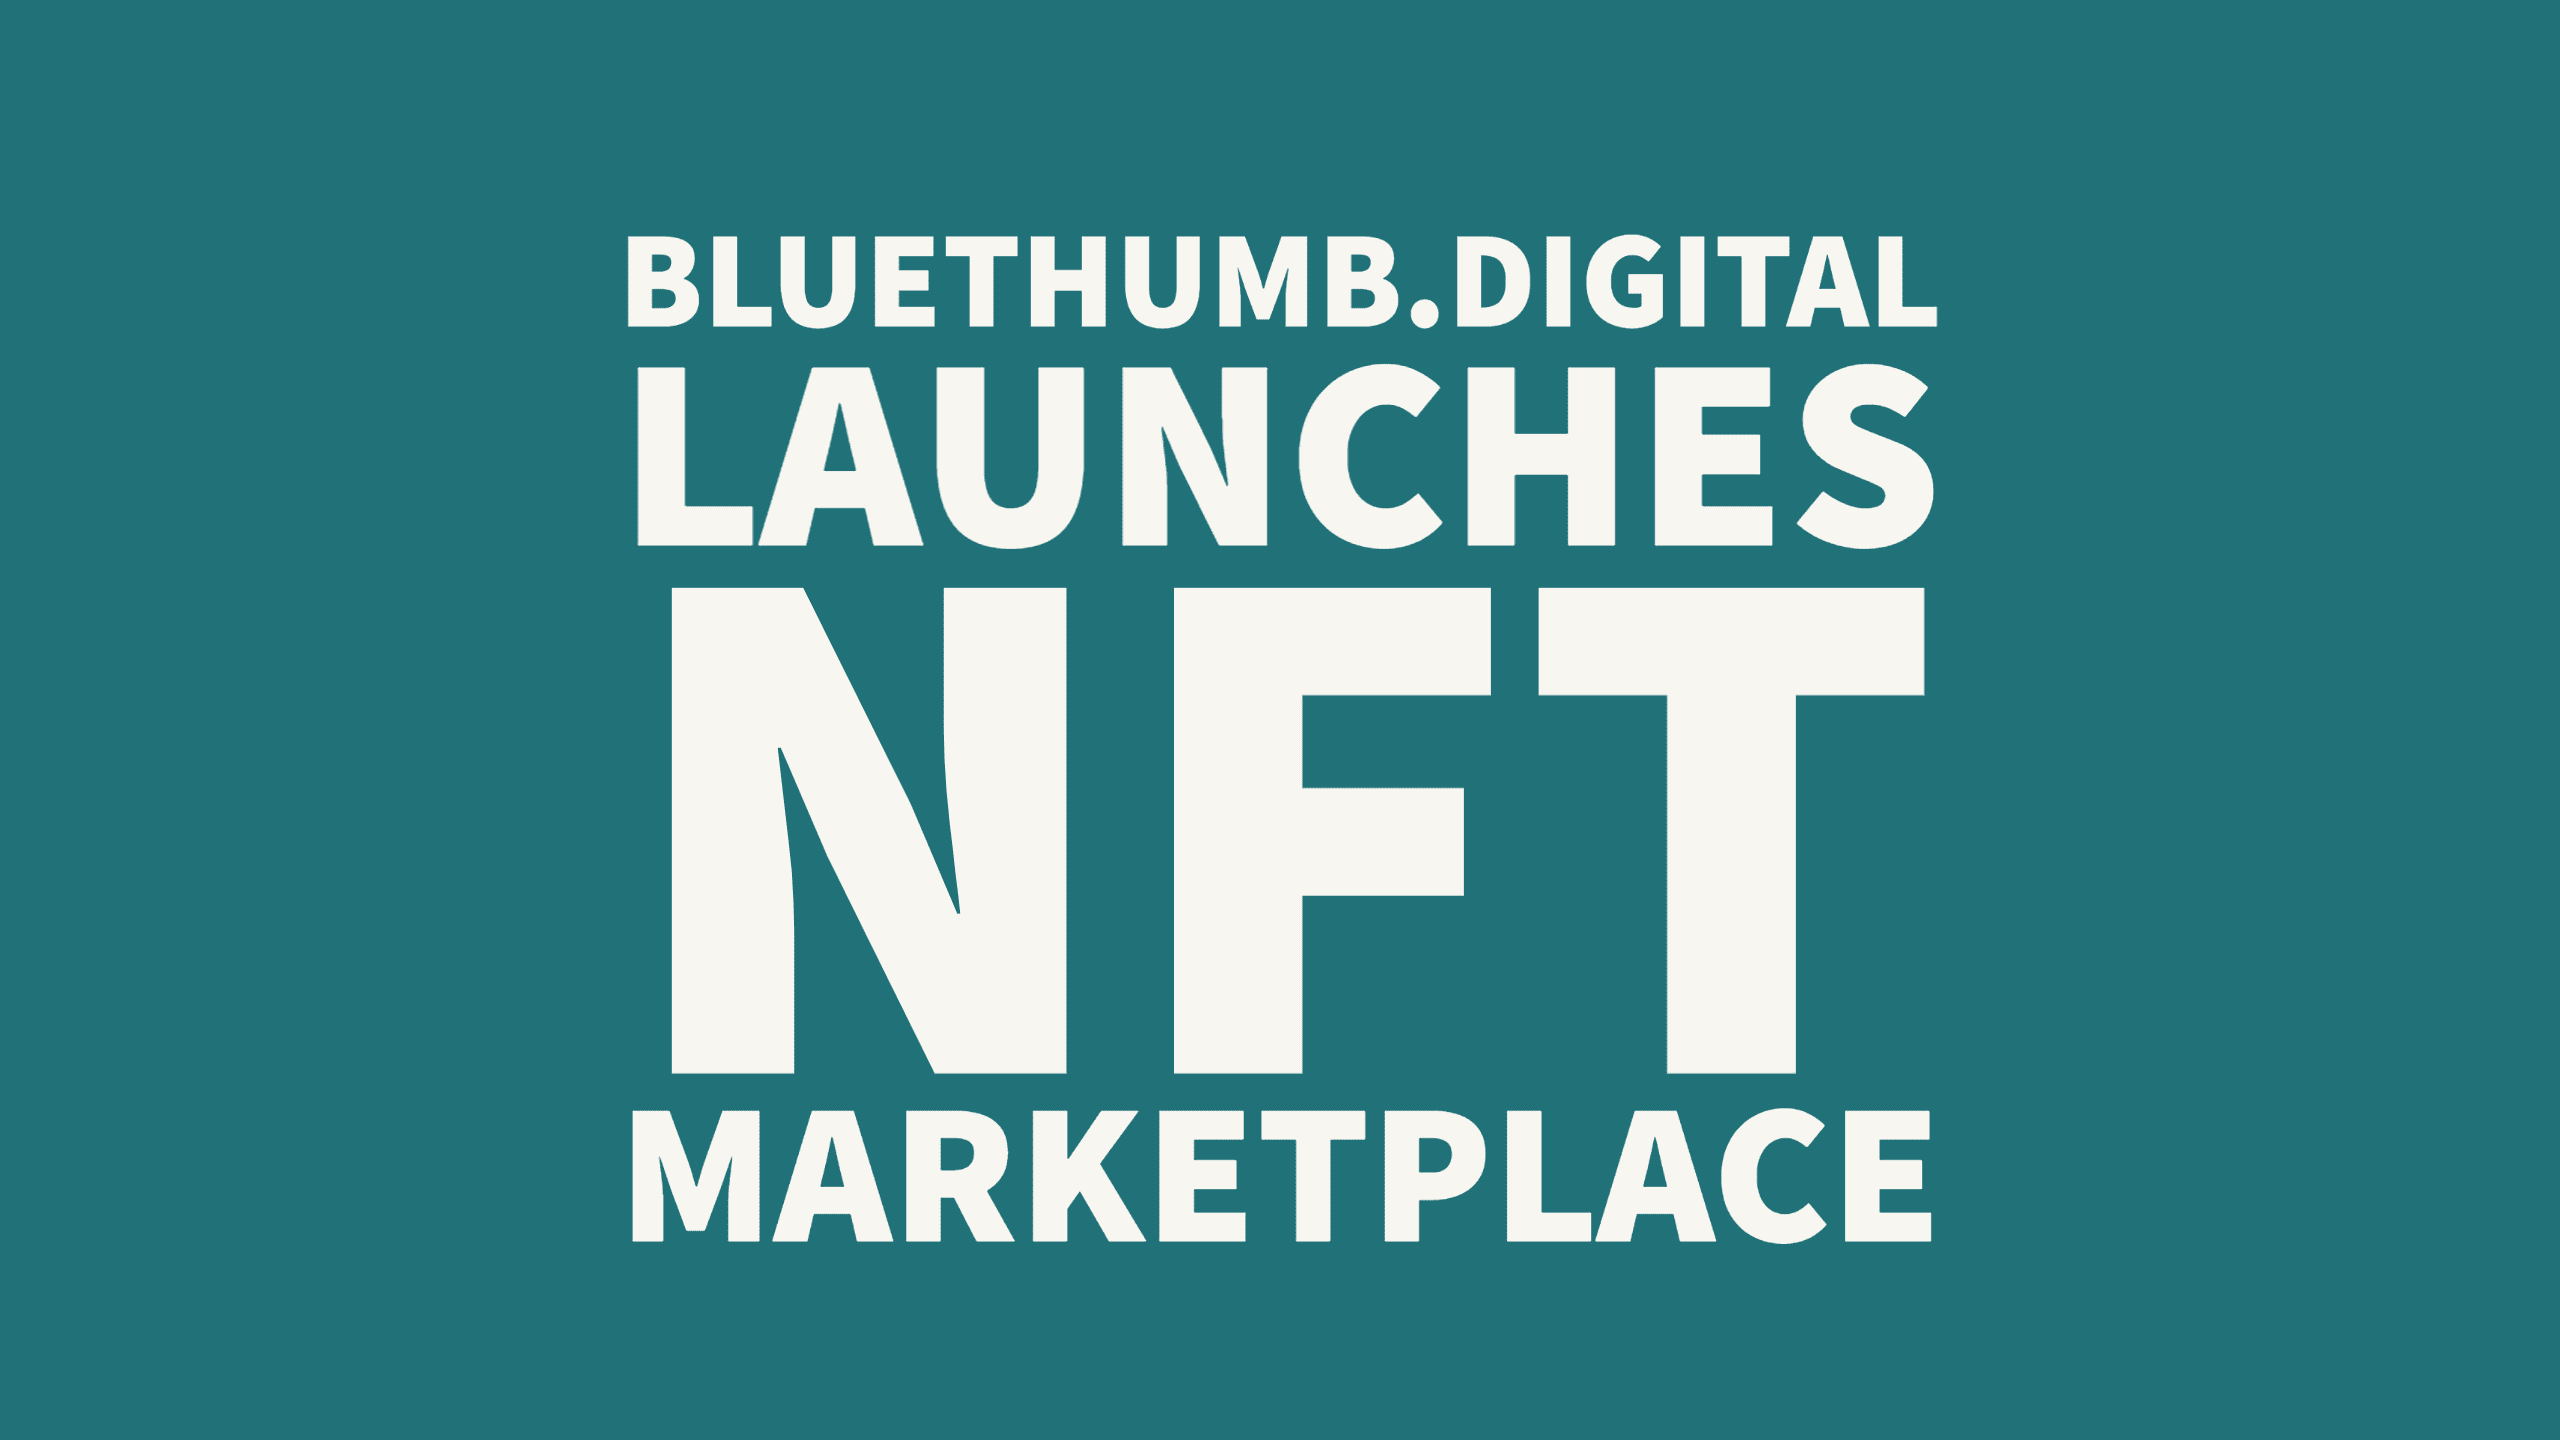 Bluethumb Digital Launches into NFTs